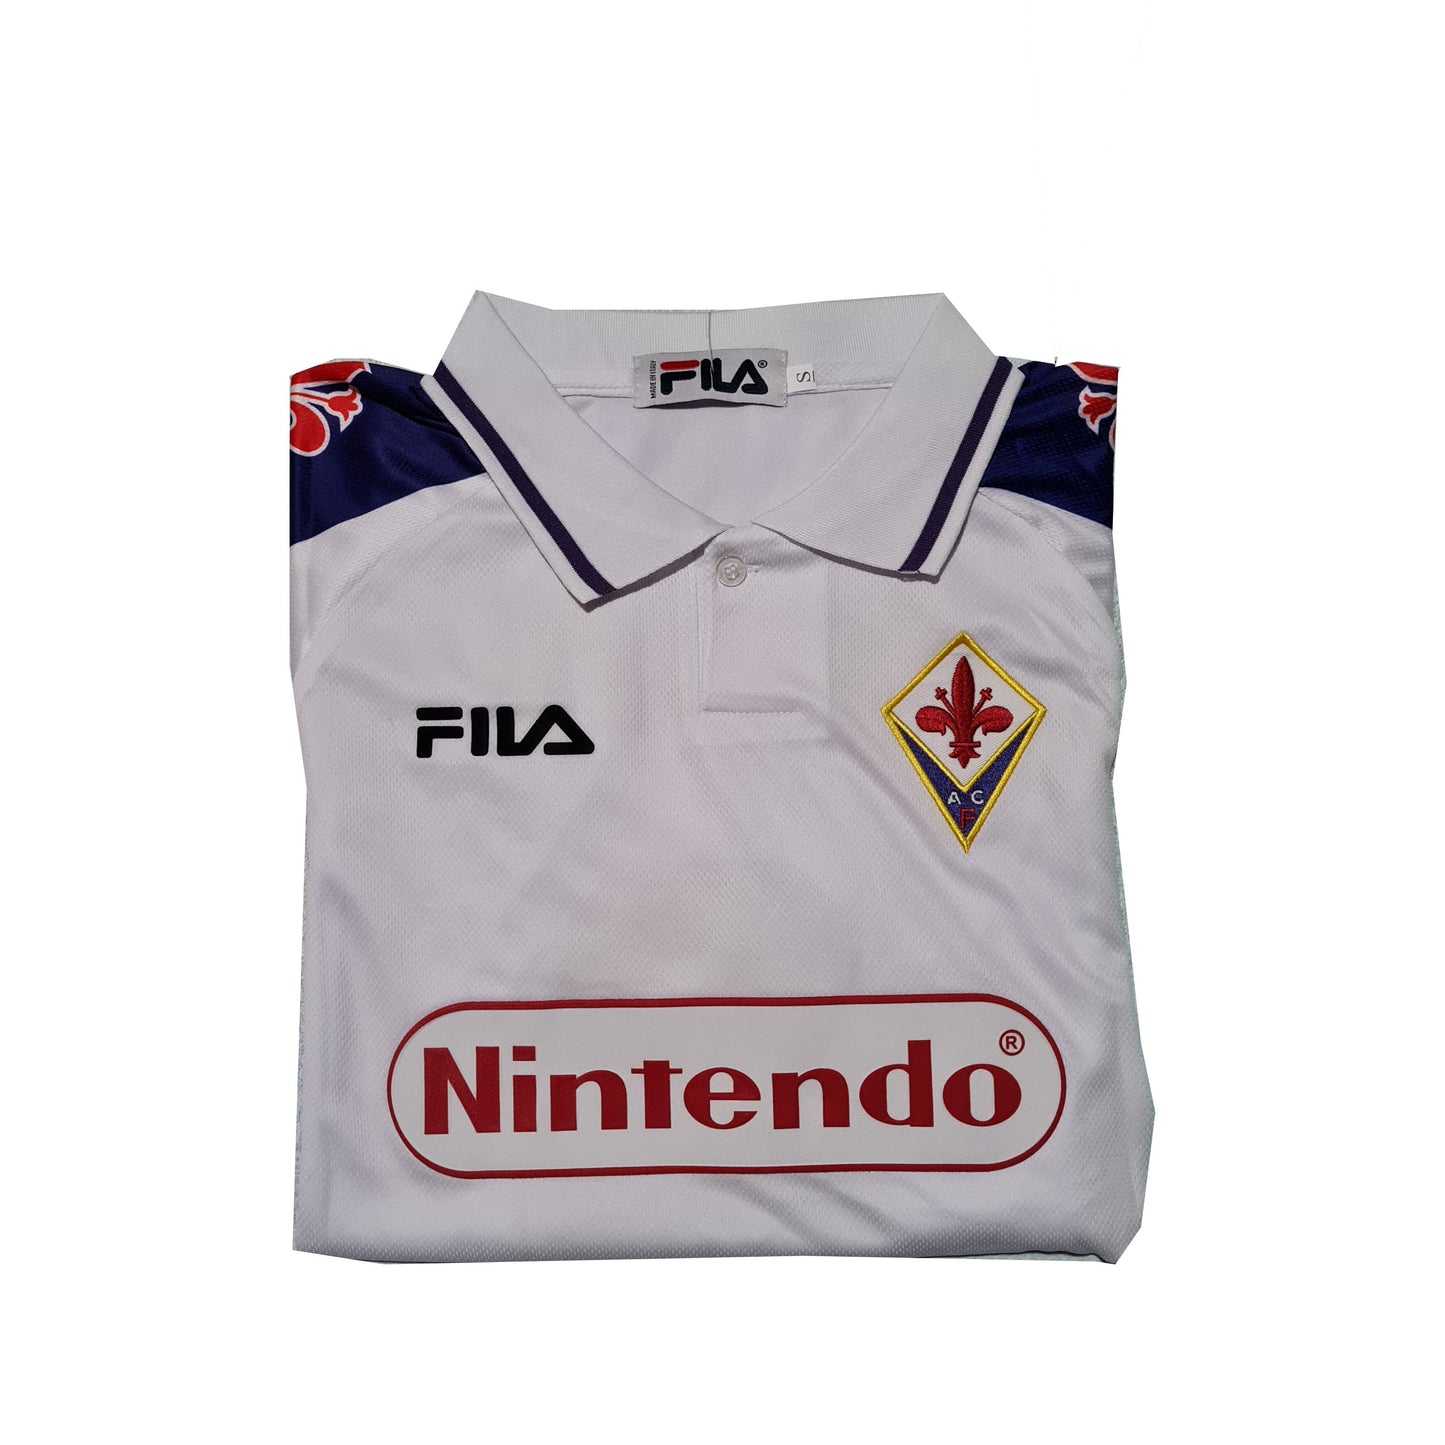 Fiorentina Suplente 1998/99 - Batistuta - Thunder Internacional